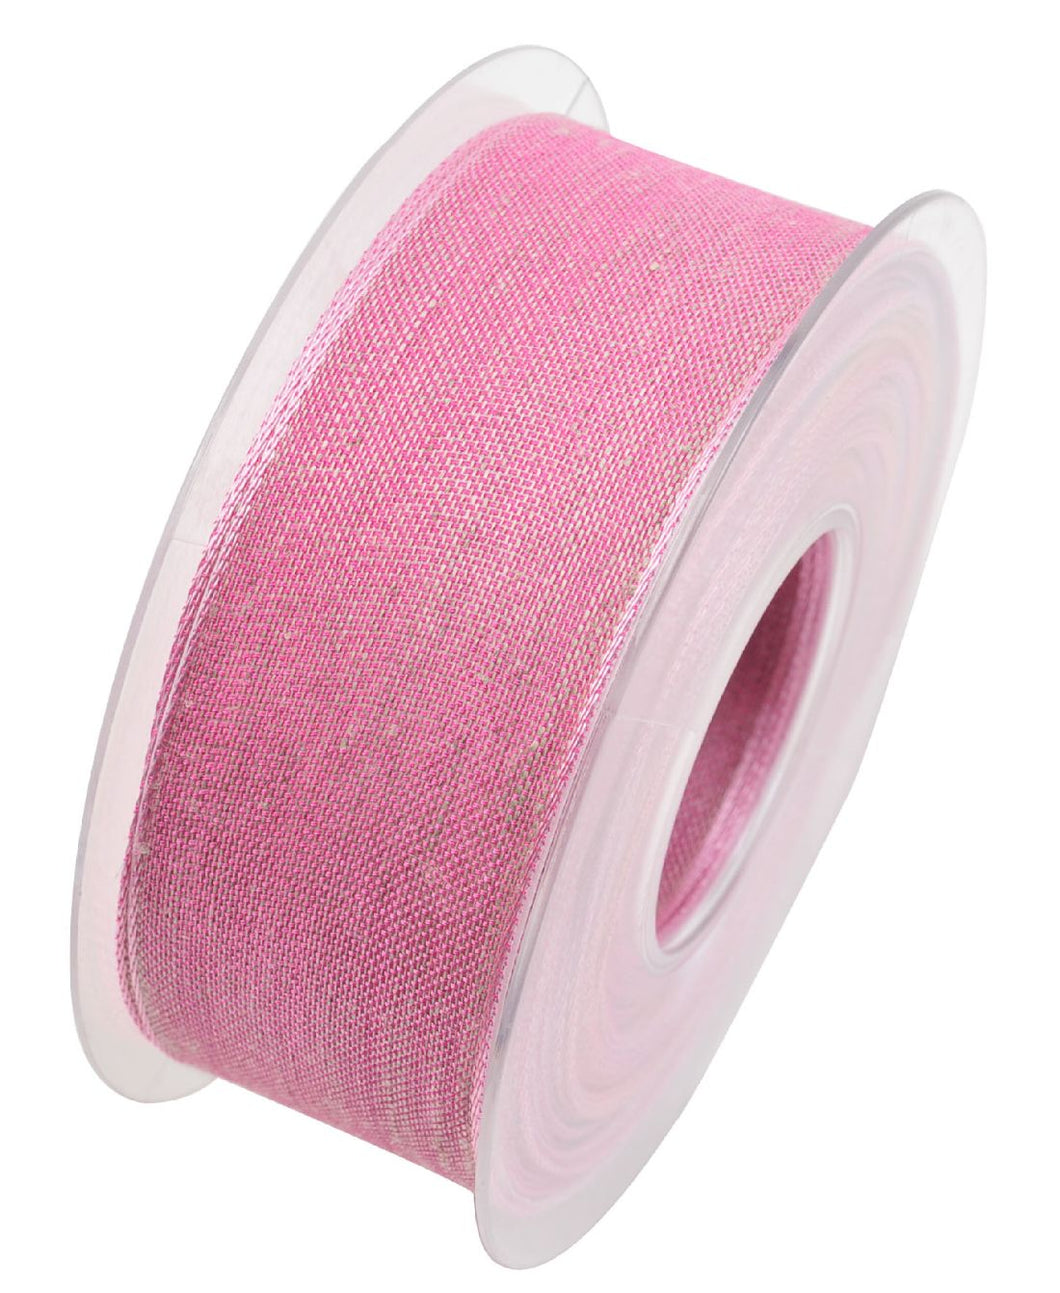 Leinenband Botswana mit Draht / rosa / Breite: 40 mm / Länge: 20 Meter - 1,11 € pro Meter